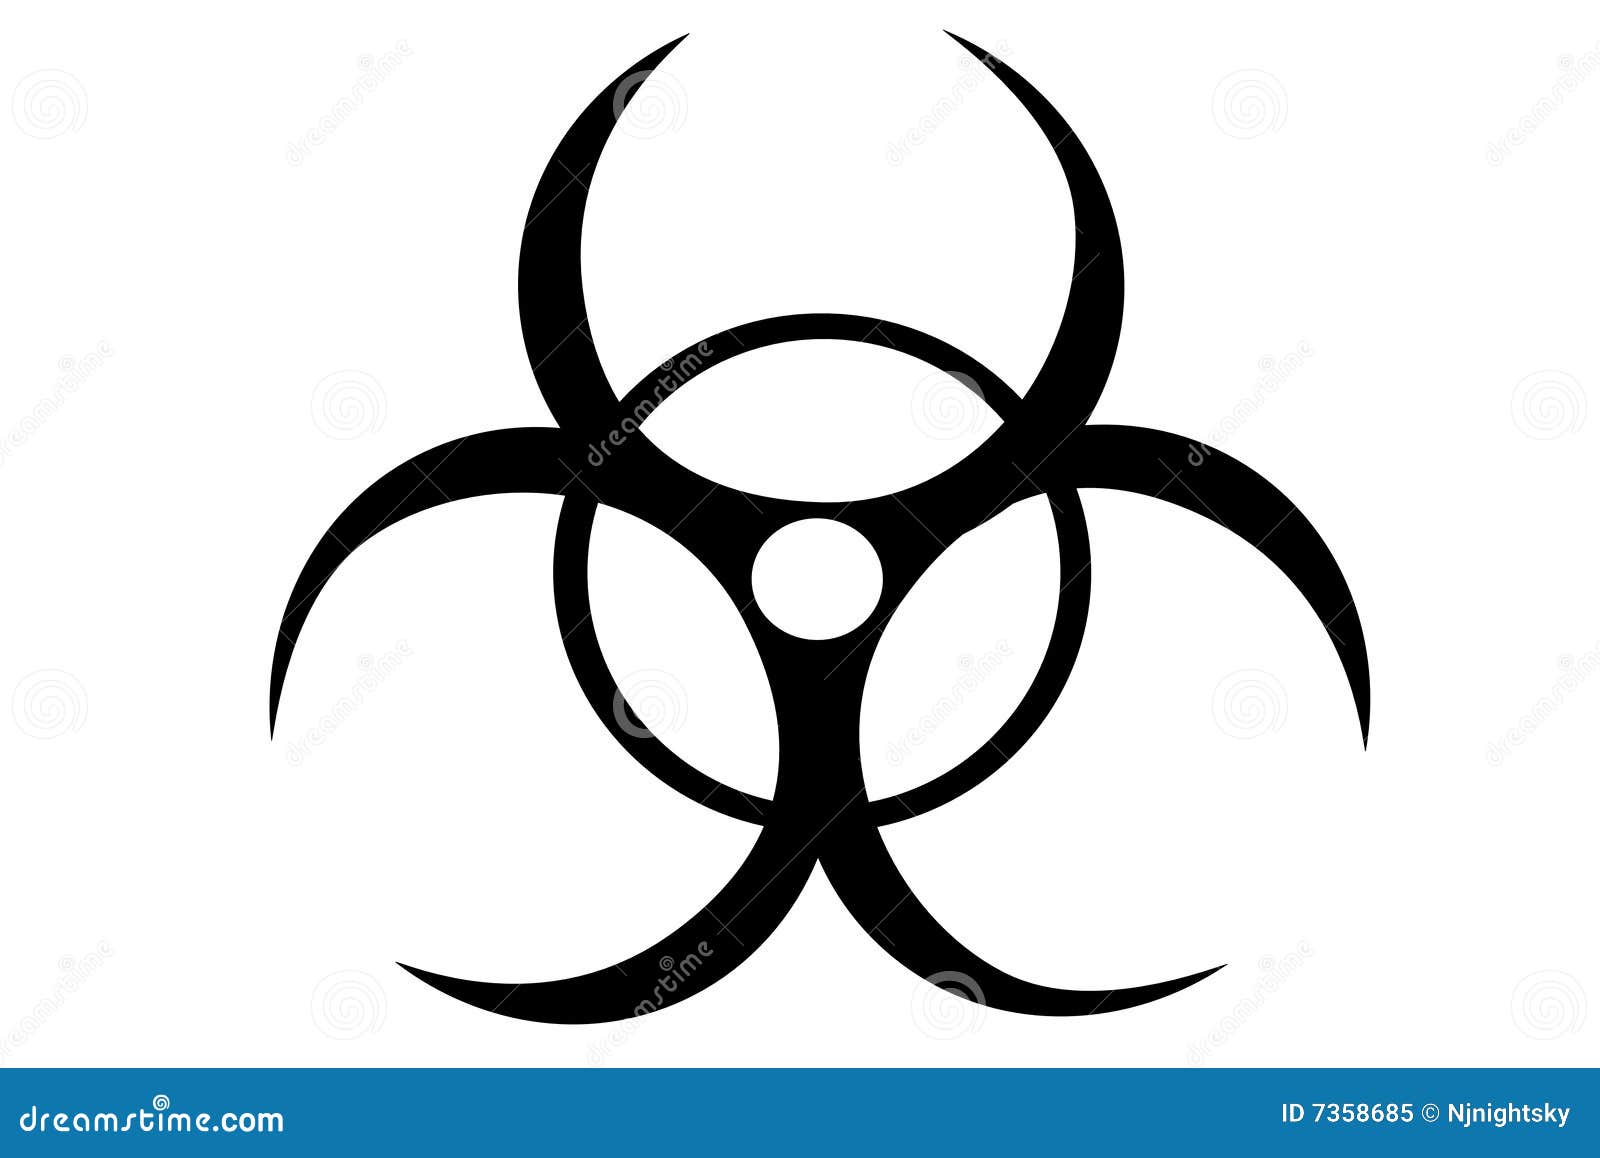 Trefoil, Radioactive, Radioactive decay, Biological hazard, Biohazard,  Human skull symbolism, Hazard symbol, radiation, Tattoo, membrane Winged  Insect | Anyrgb